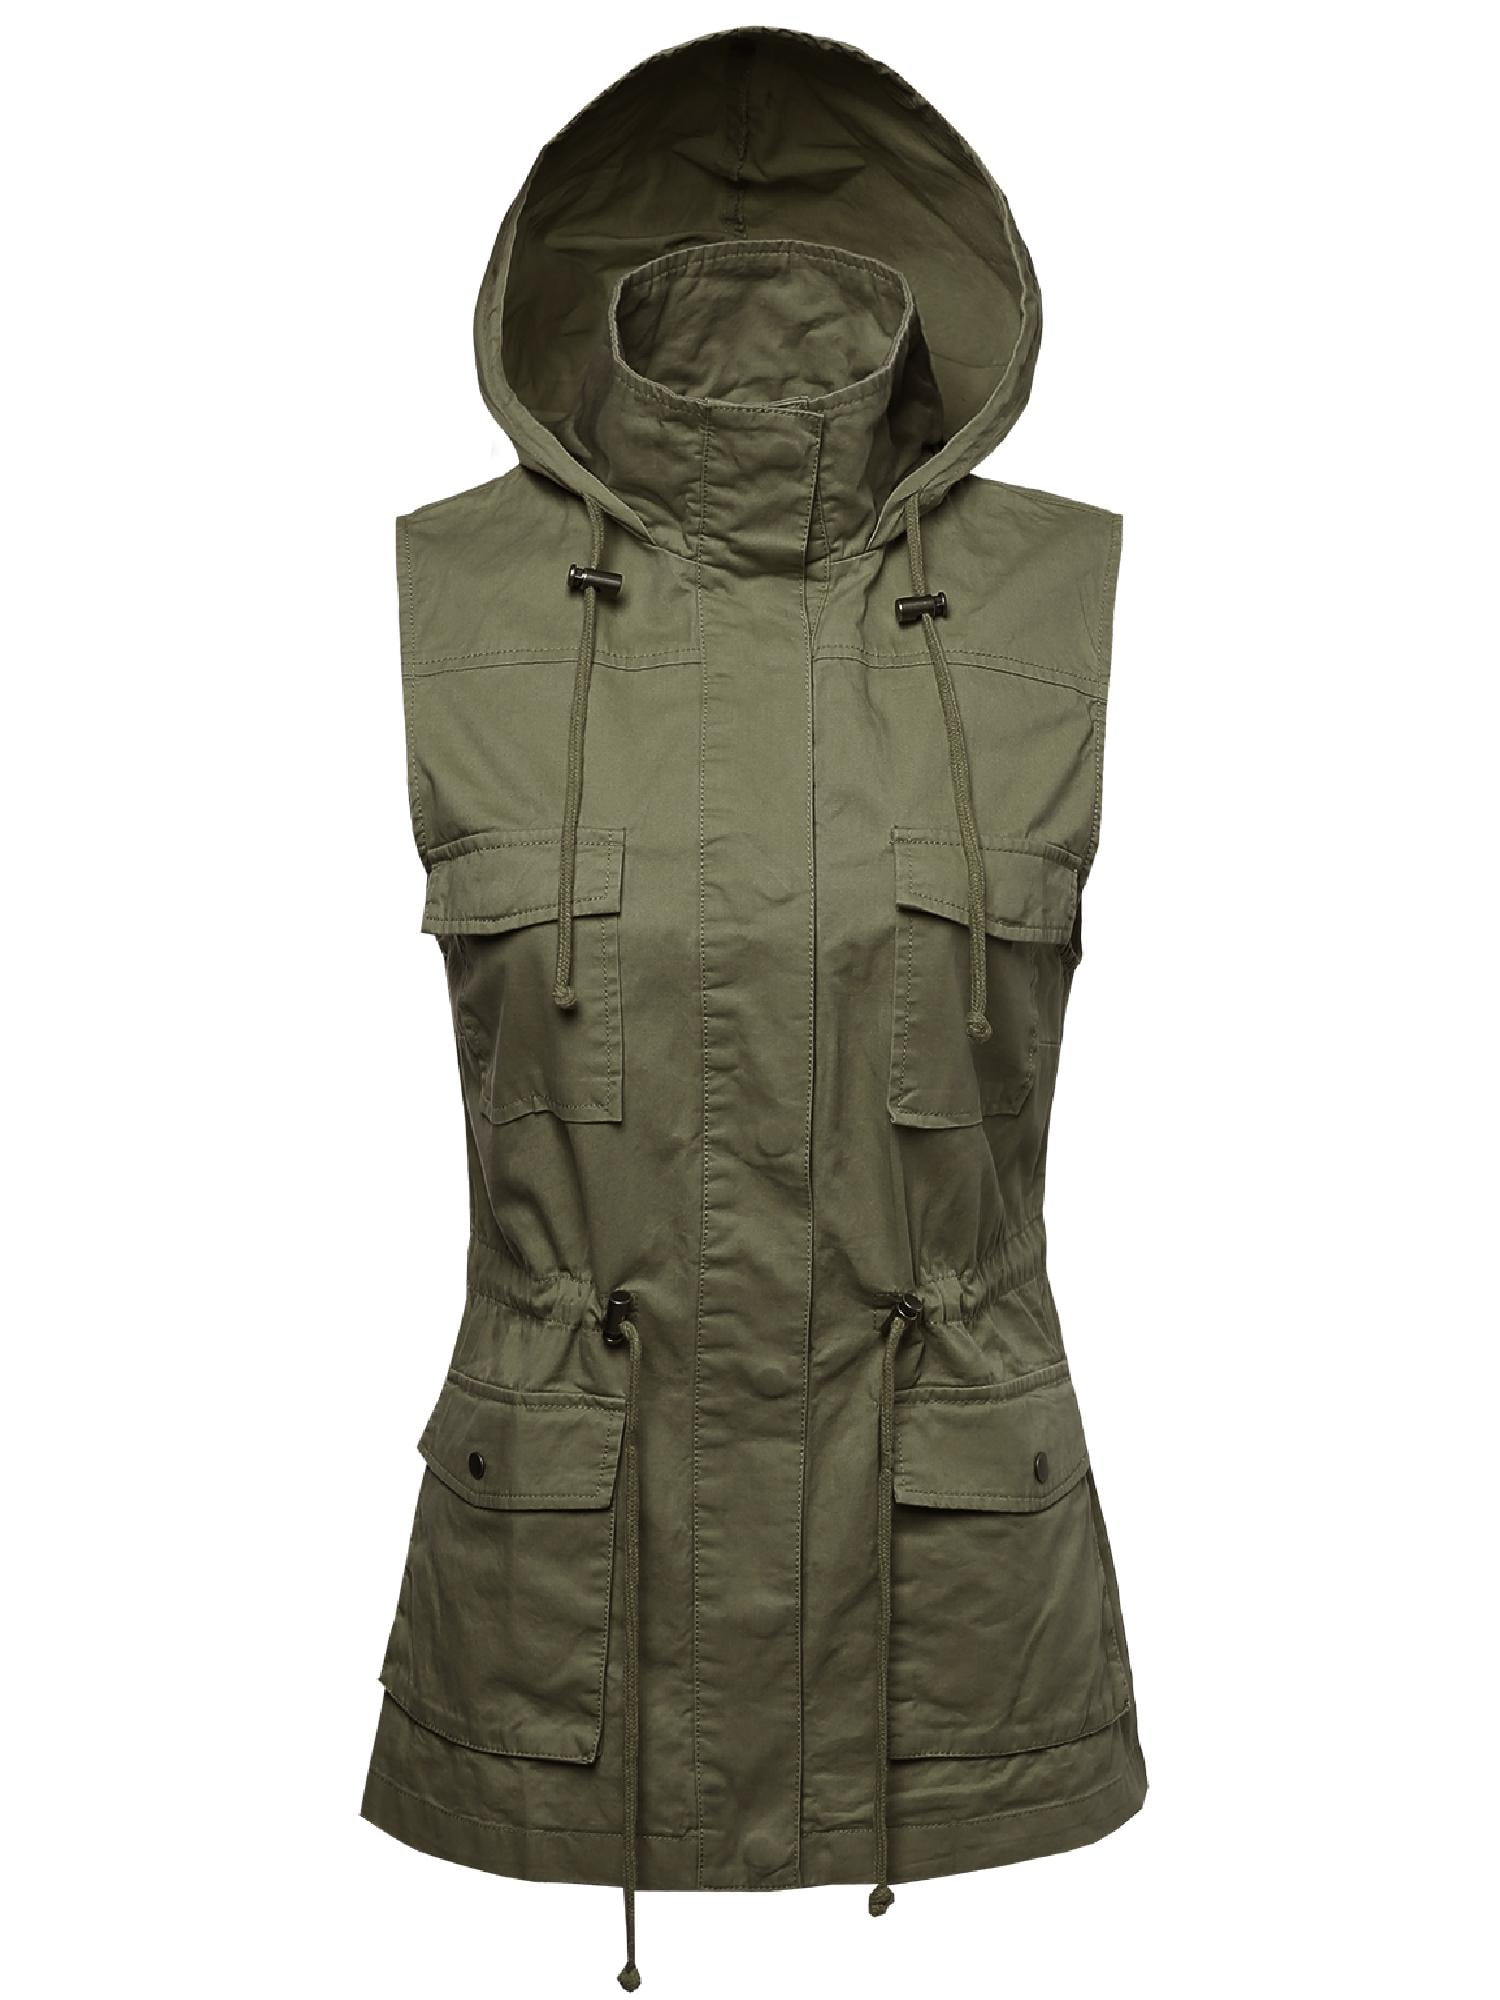 FashionOutfit - FashionOutfit Women's Sleeveless Safari Military Hooded ...